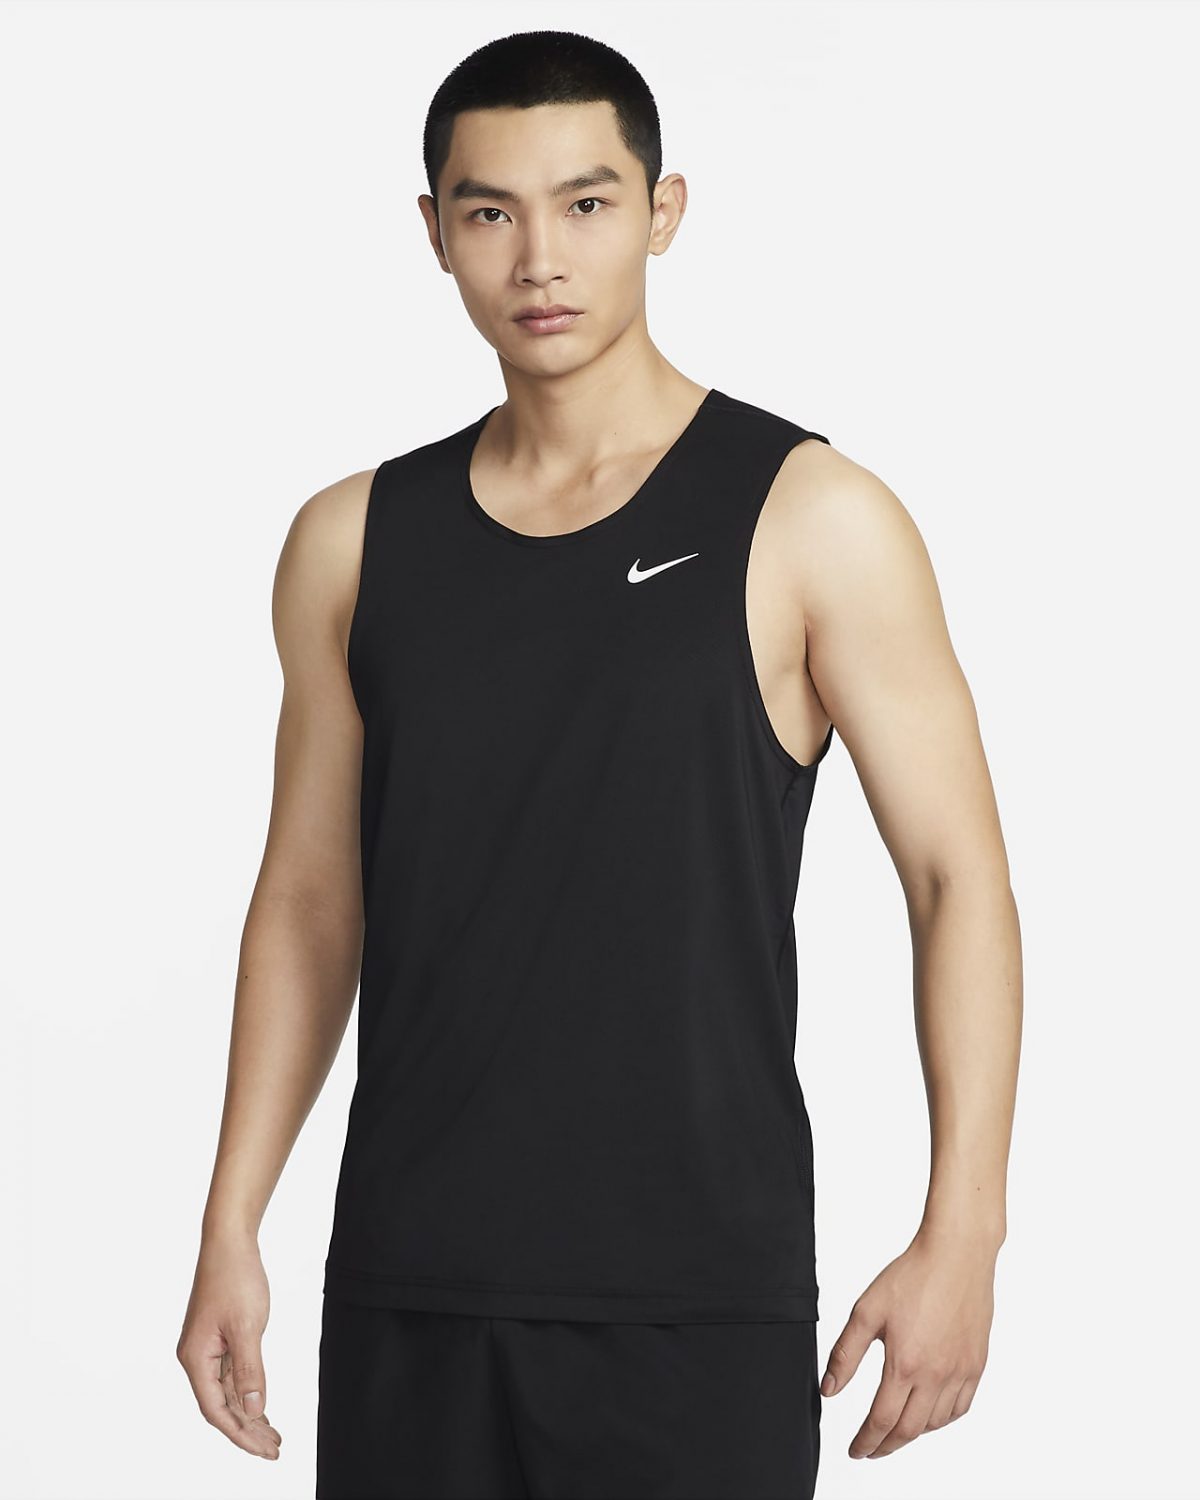 Мужская спортивная одежда Nike Dri-FIT Ready фото